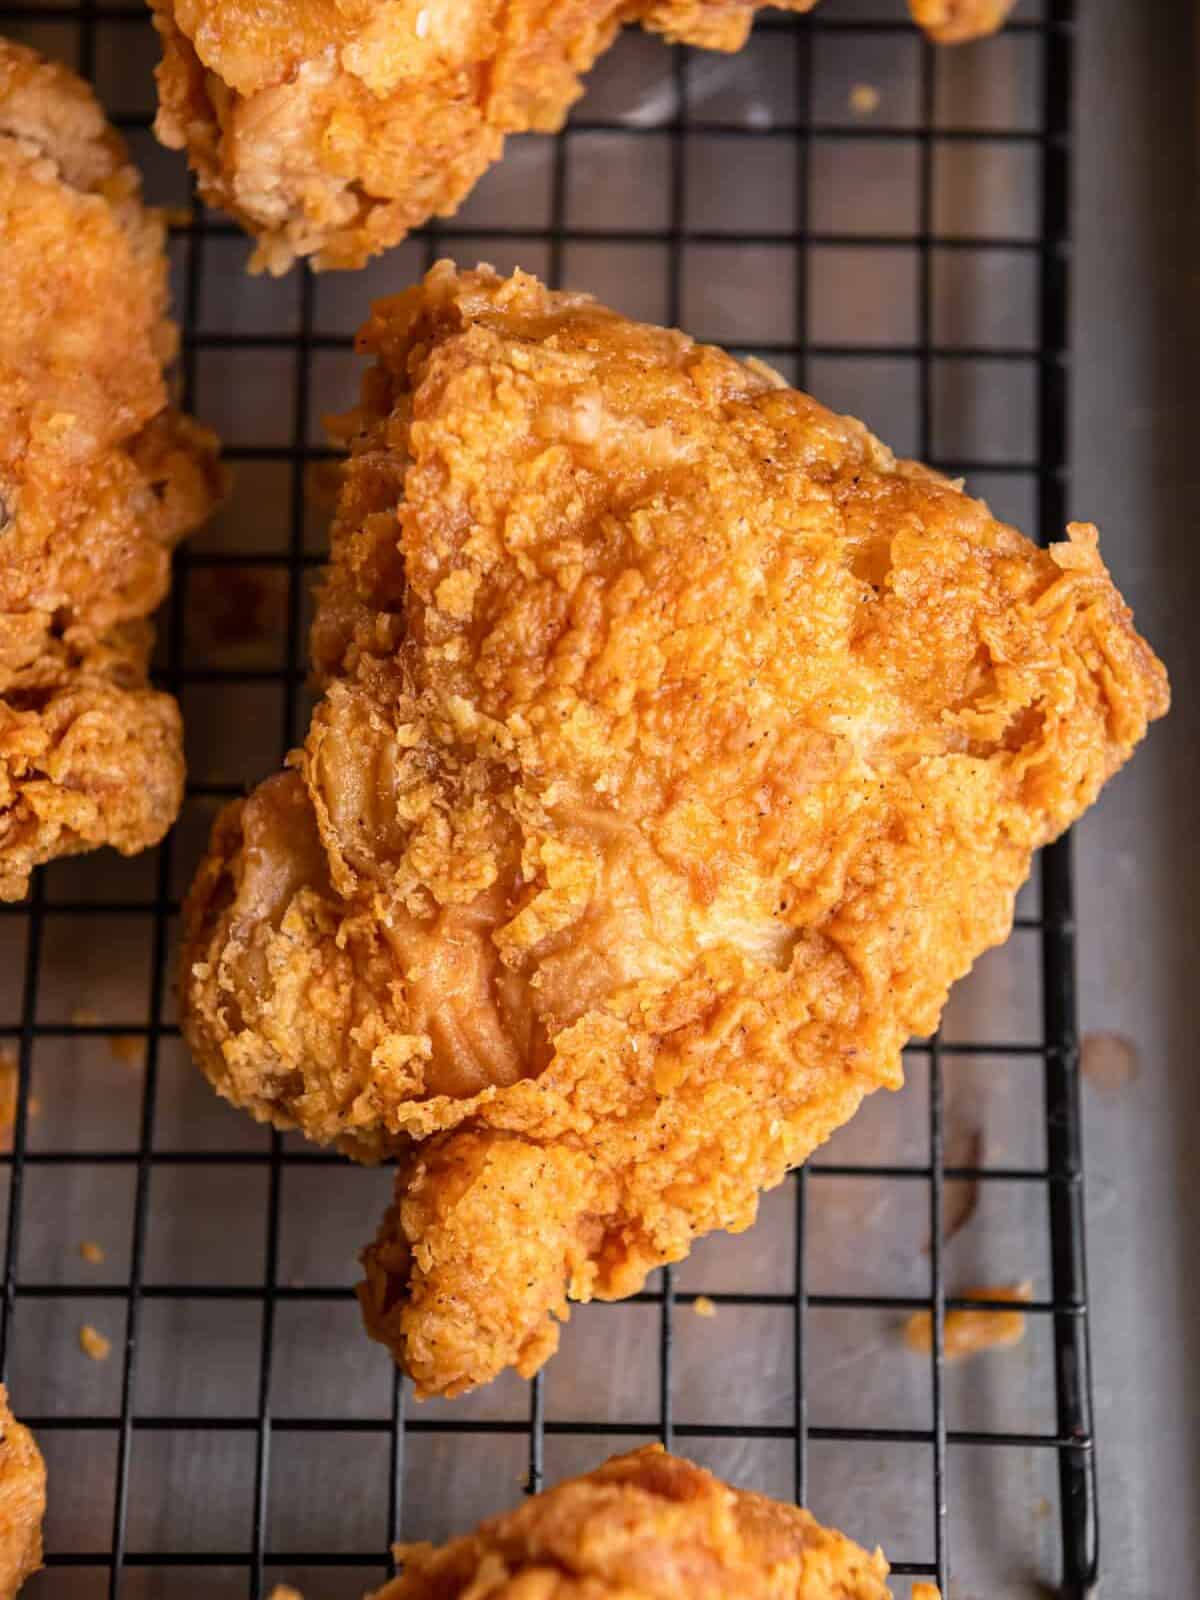 Kentucky fried chicken thigh on a cooling rack